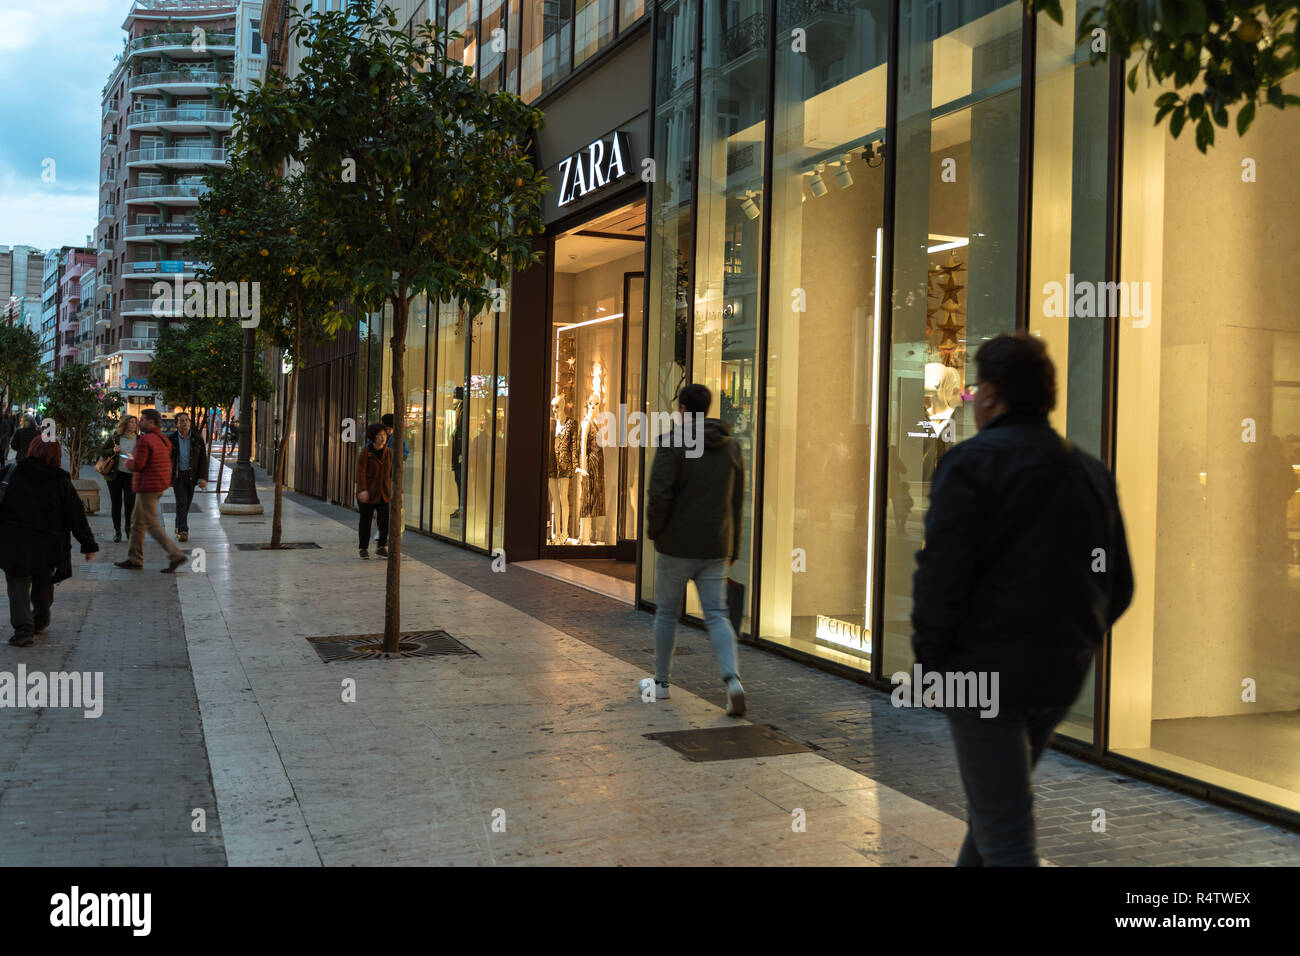 Spanish Retailer Zara Clothing Store Banque d'image et photos - Alamy